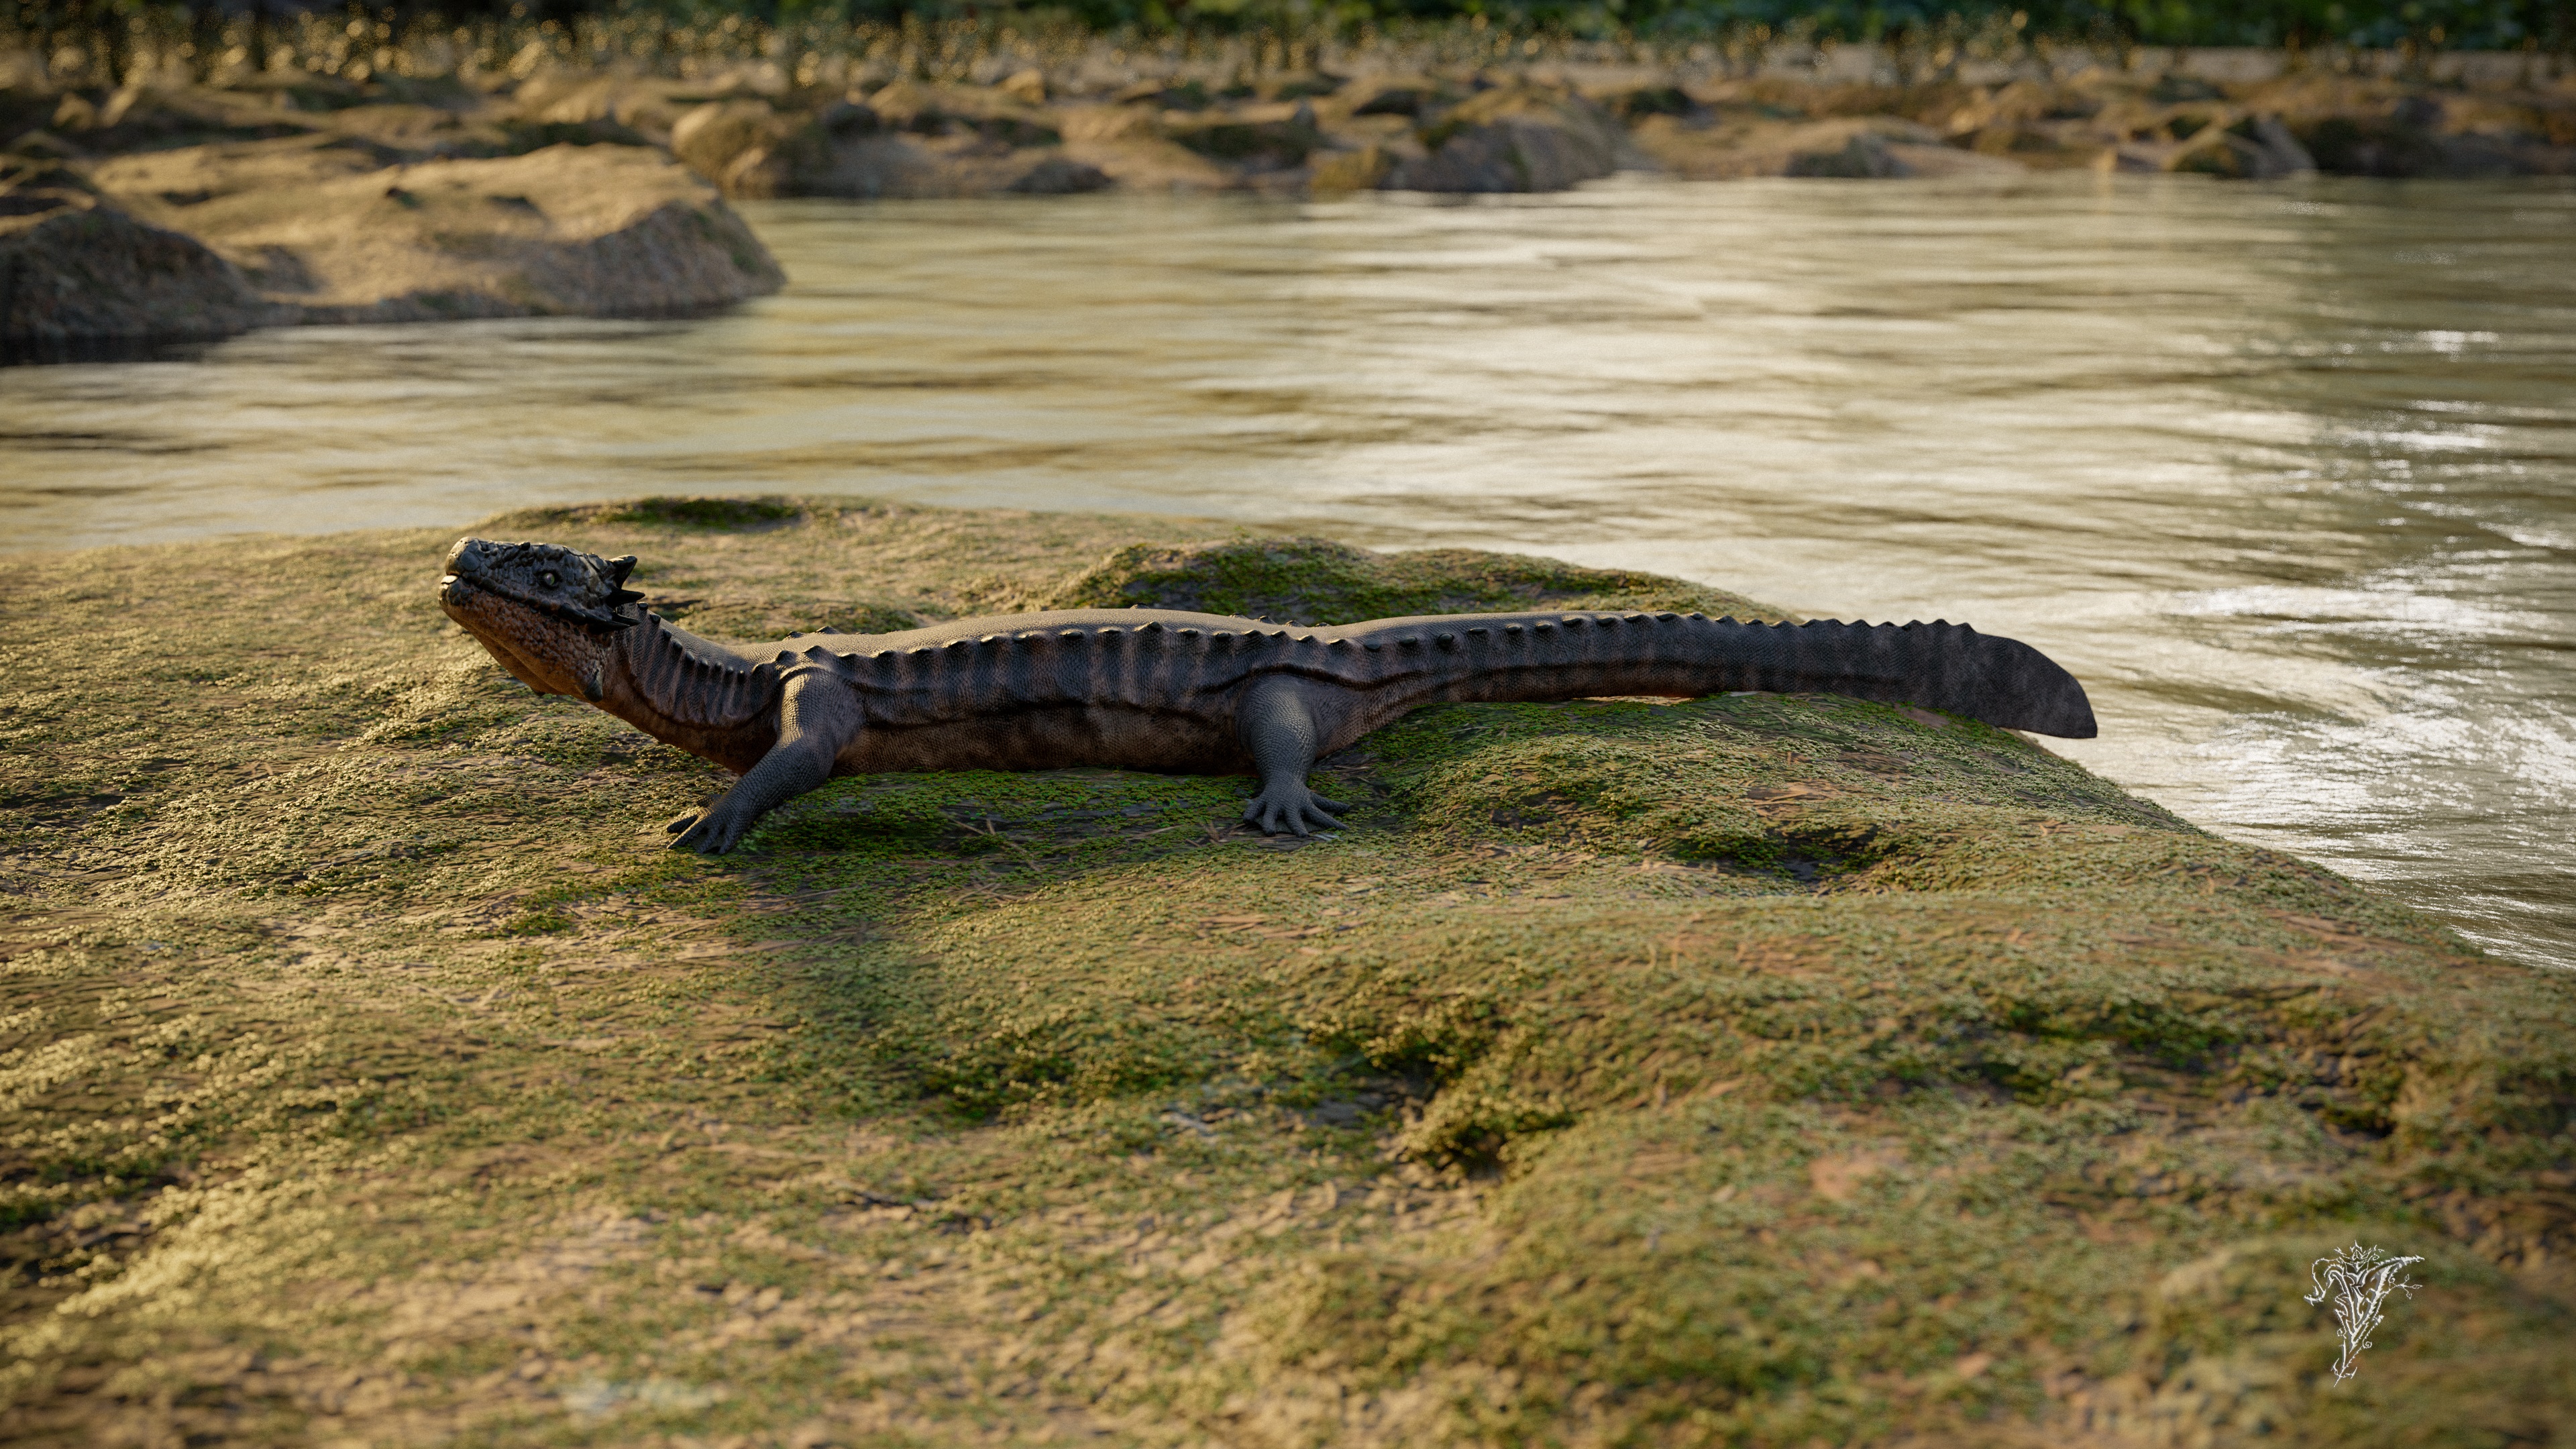 Draconology: Origins - Early beast crocodiles by VikasRao on DeviantArt